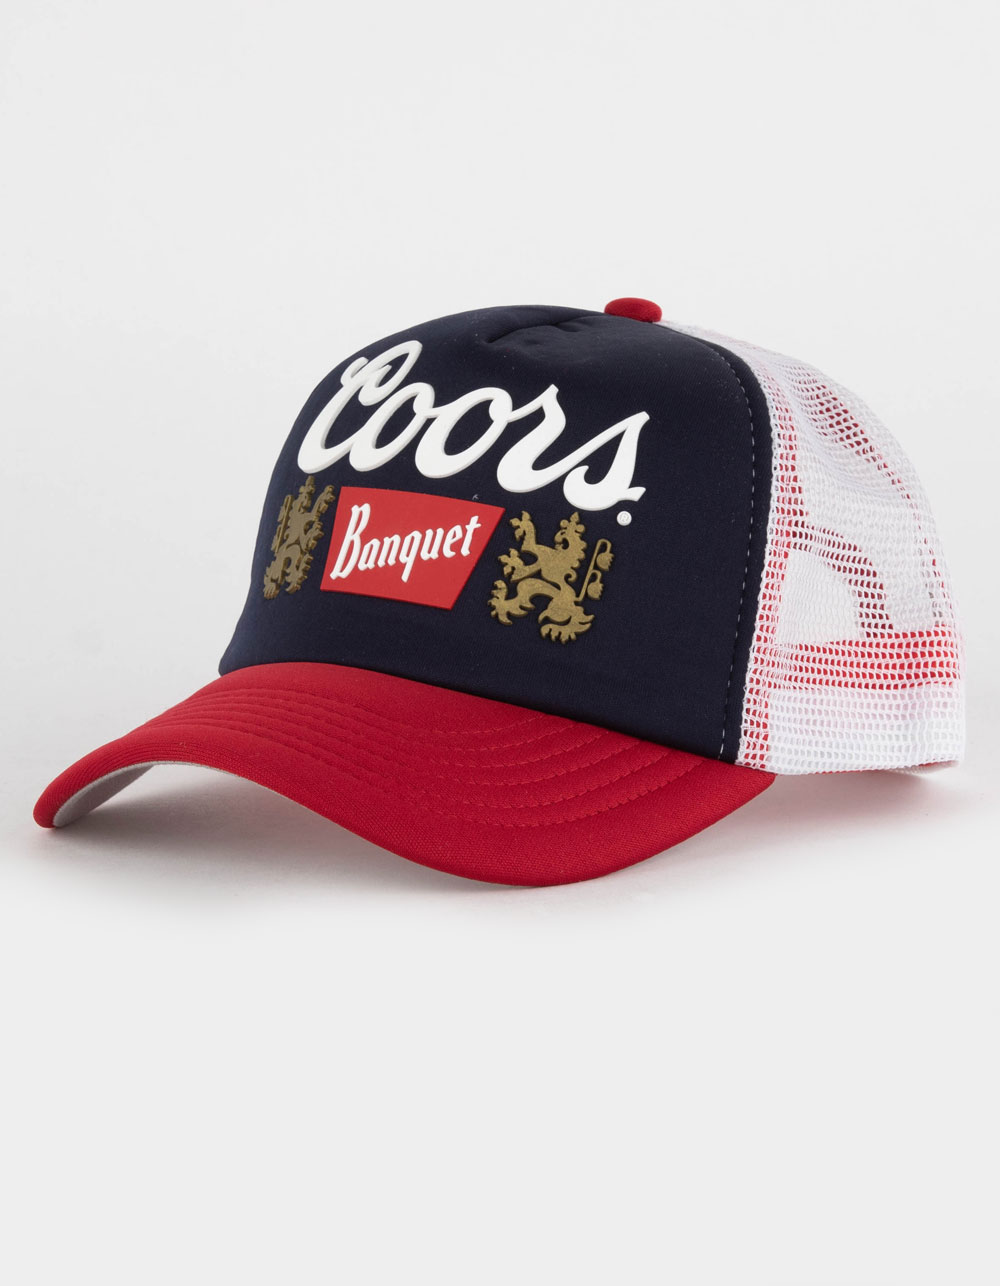 COORS Banquet Mens Trucker Hat - RED COMBO | Tillys